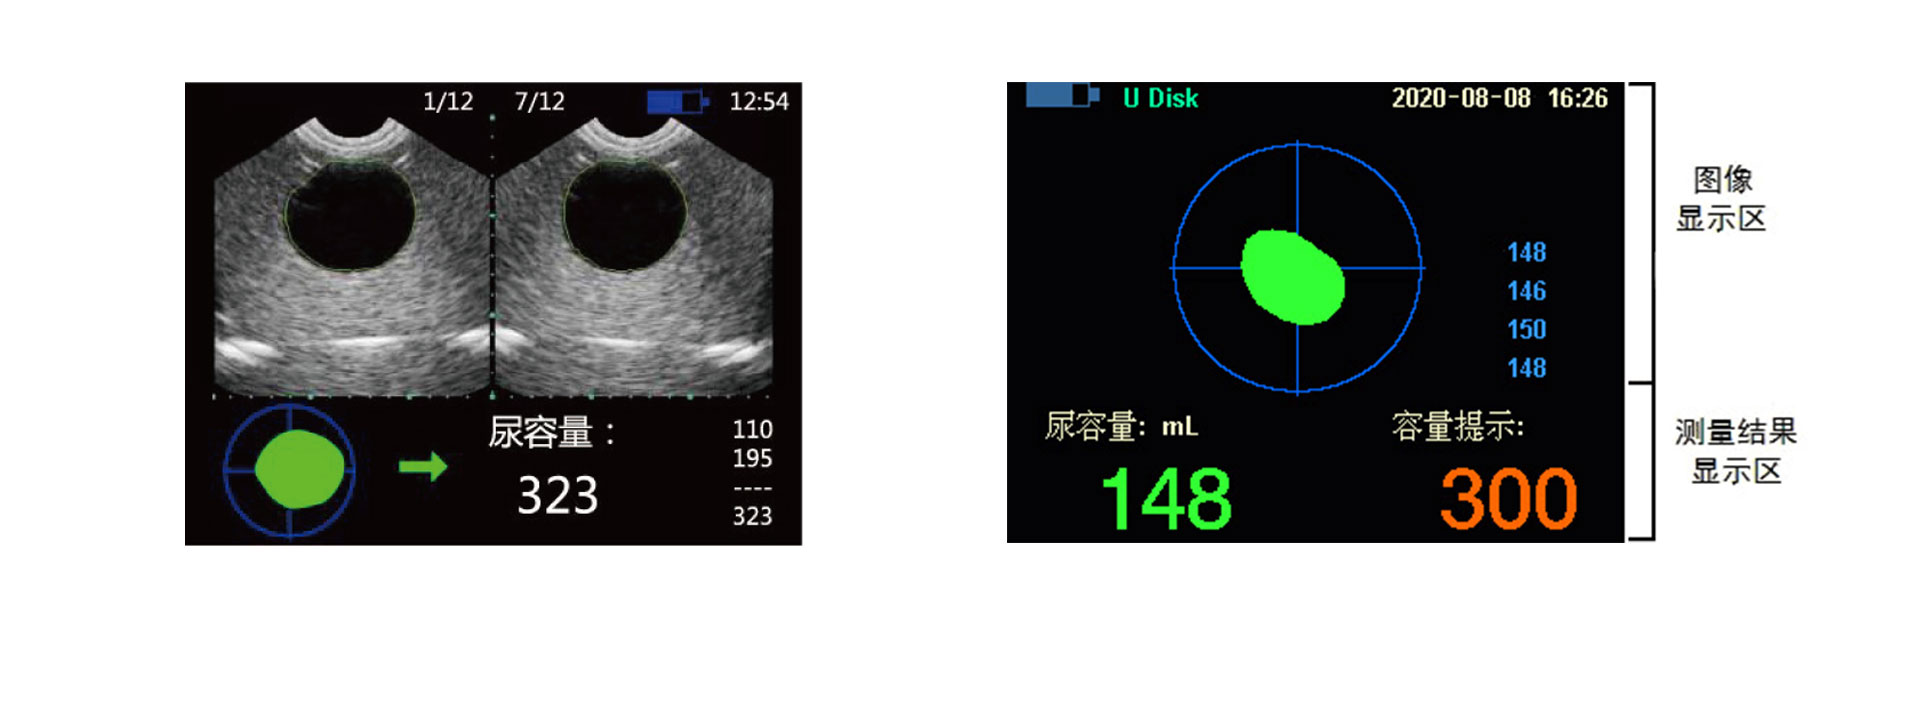 Kaixin BVT02 portable and compact ultrasound bladder scanner/bladder volume measuring instrument